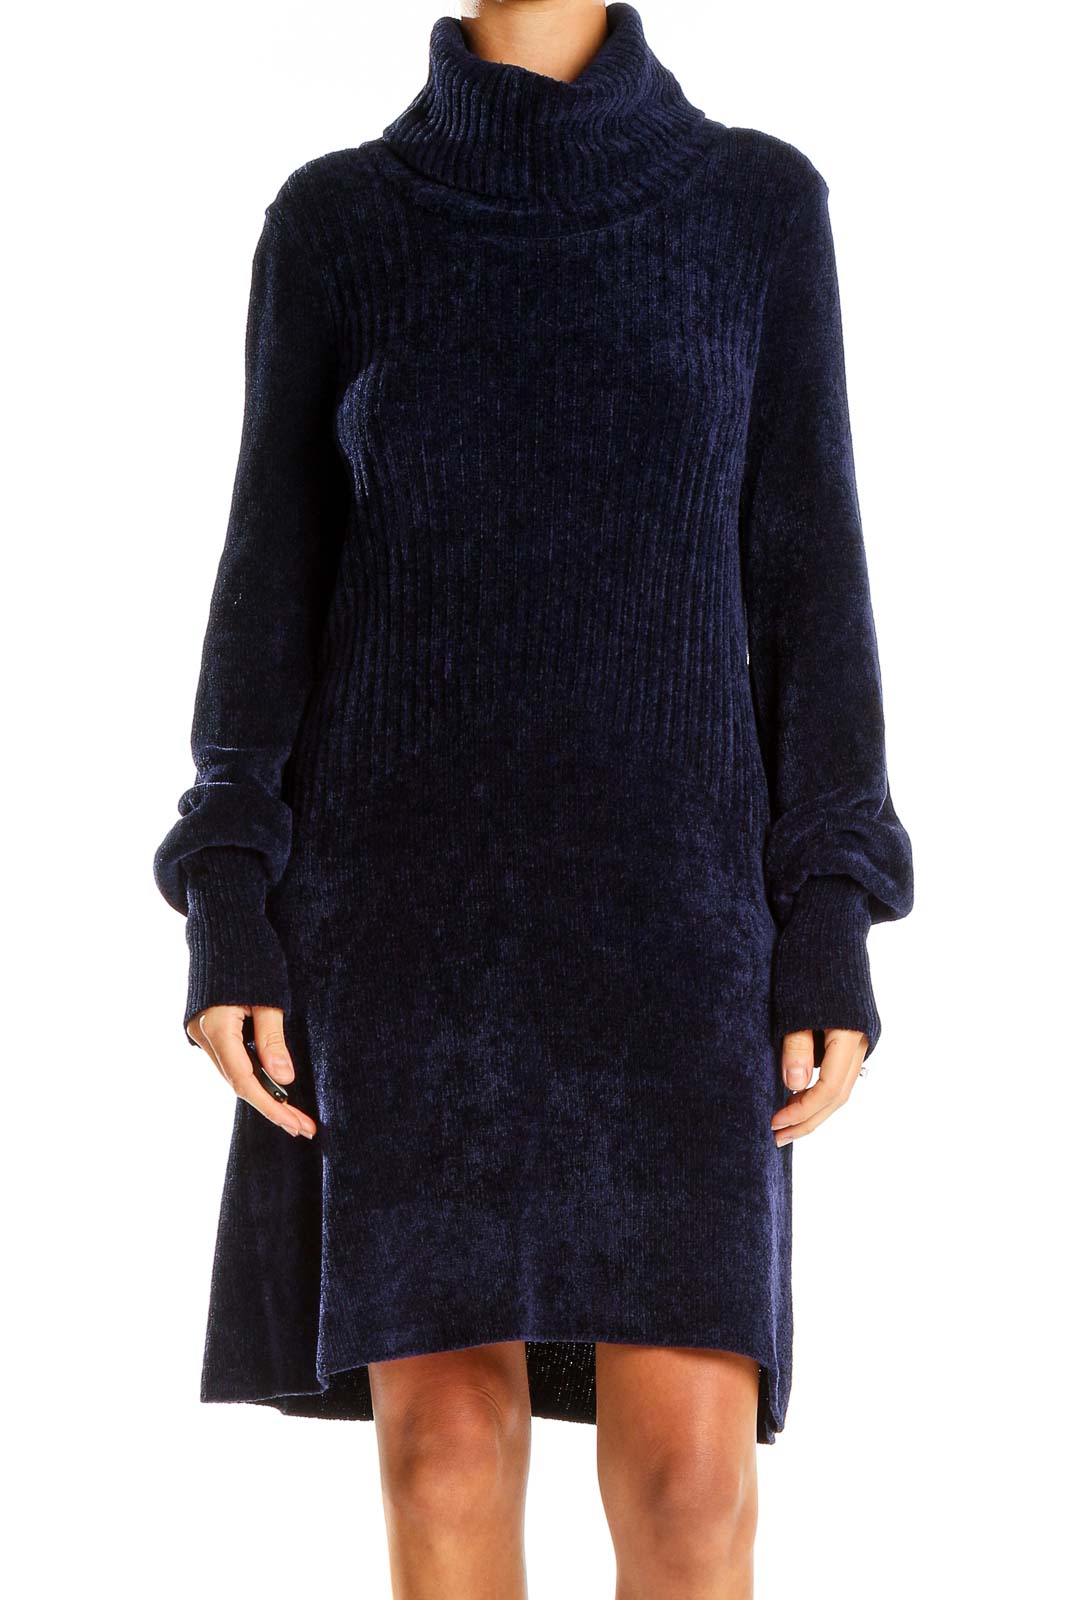 Blue Velour Turtleneck Sweater Dress Front